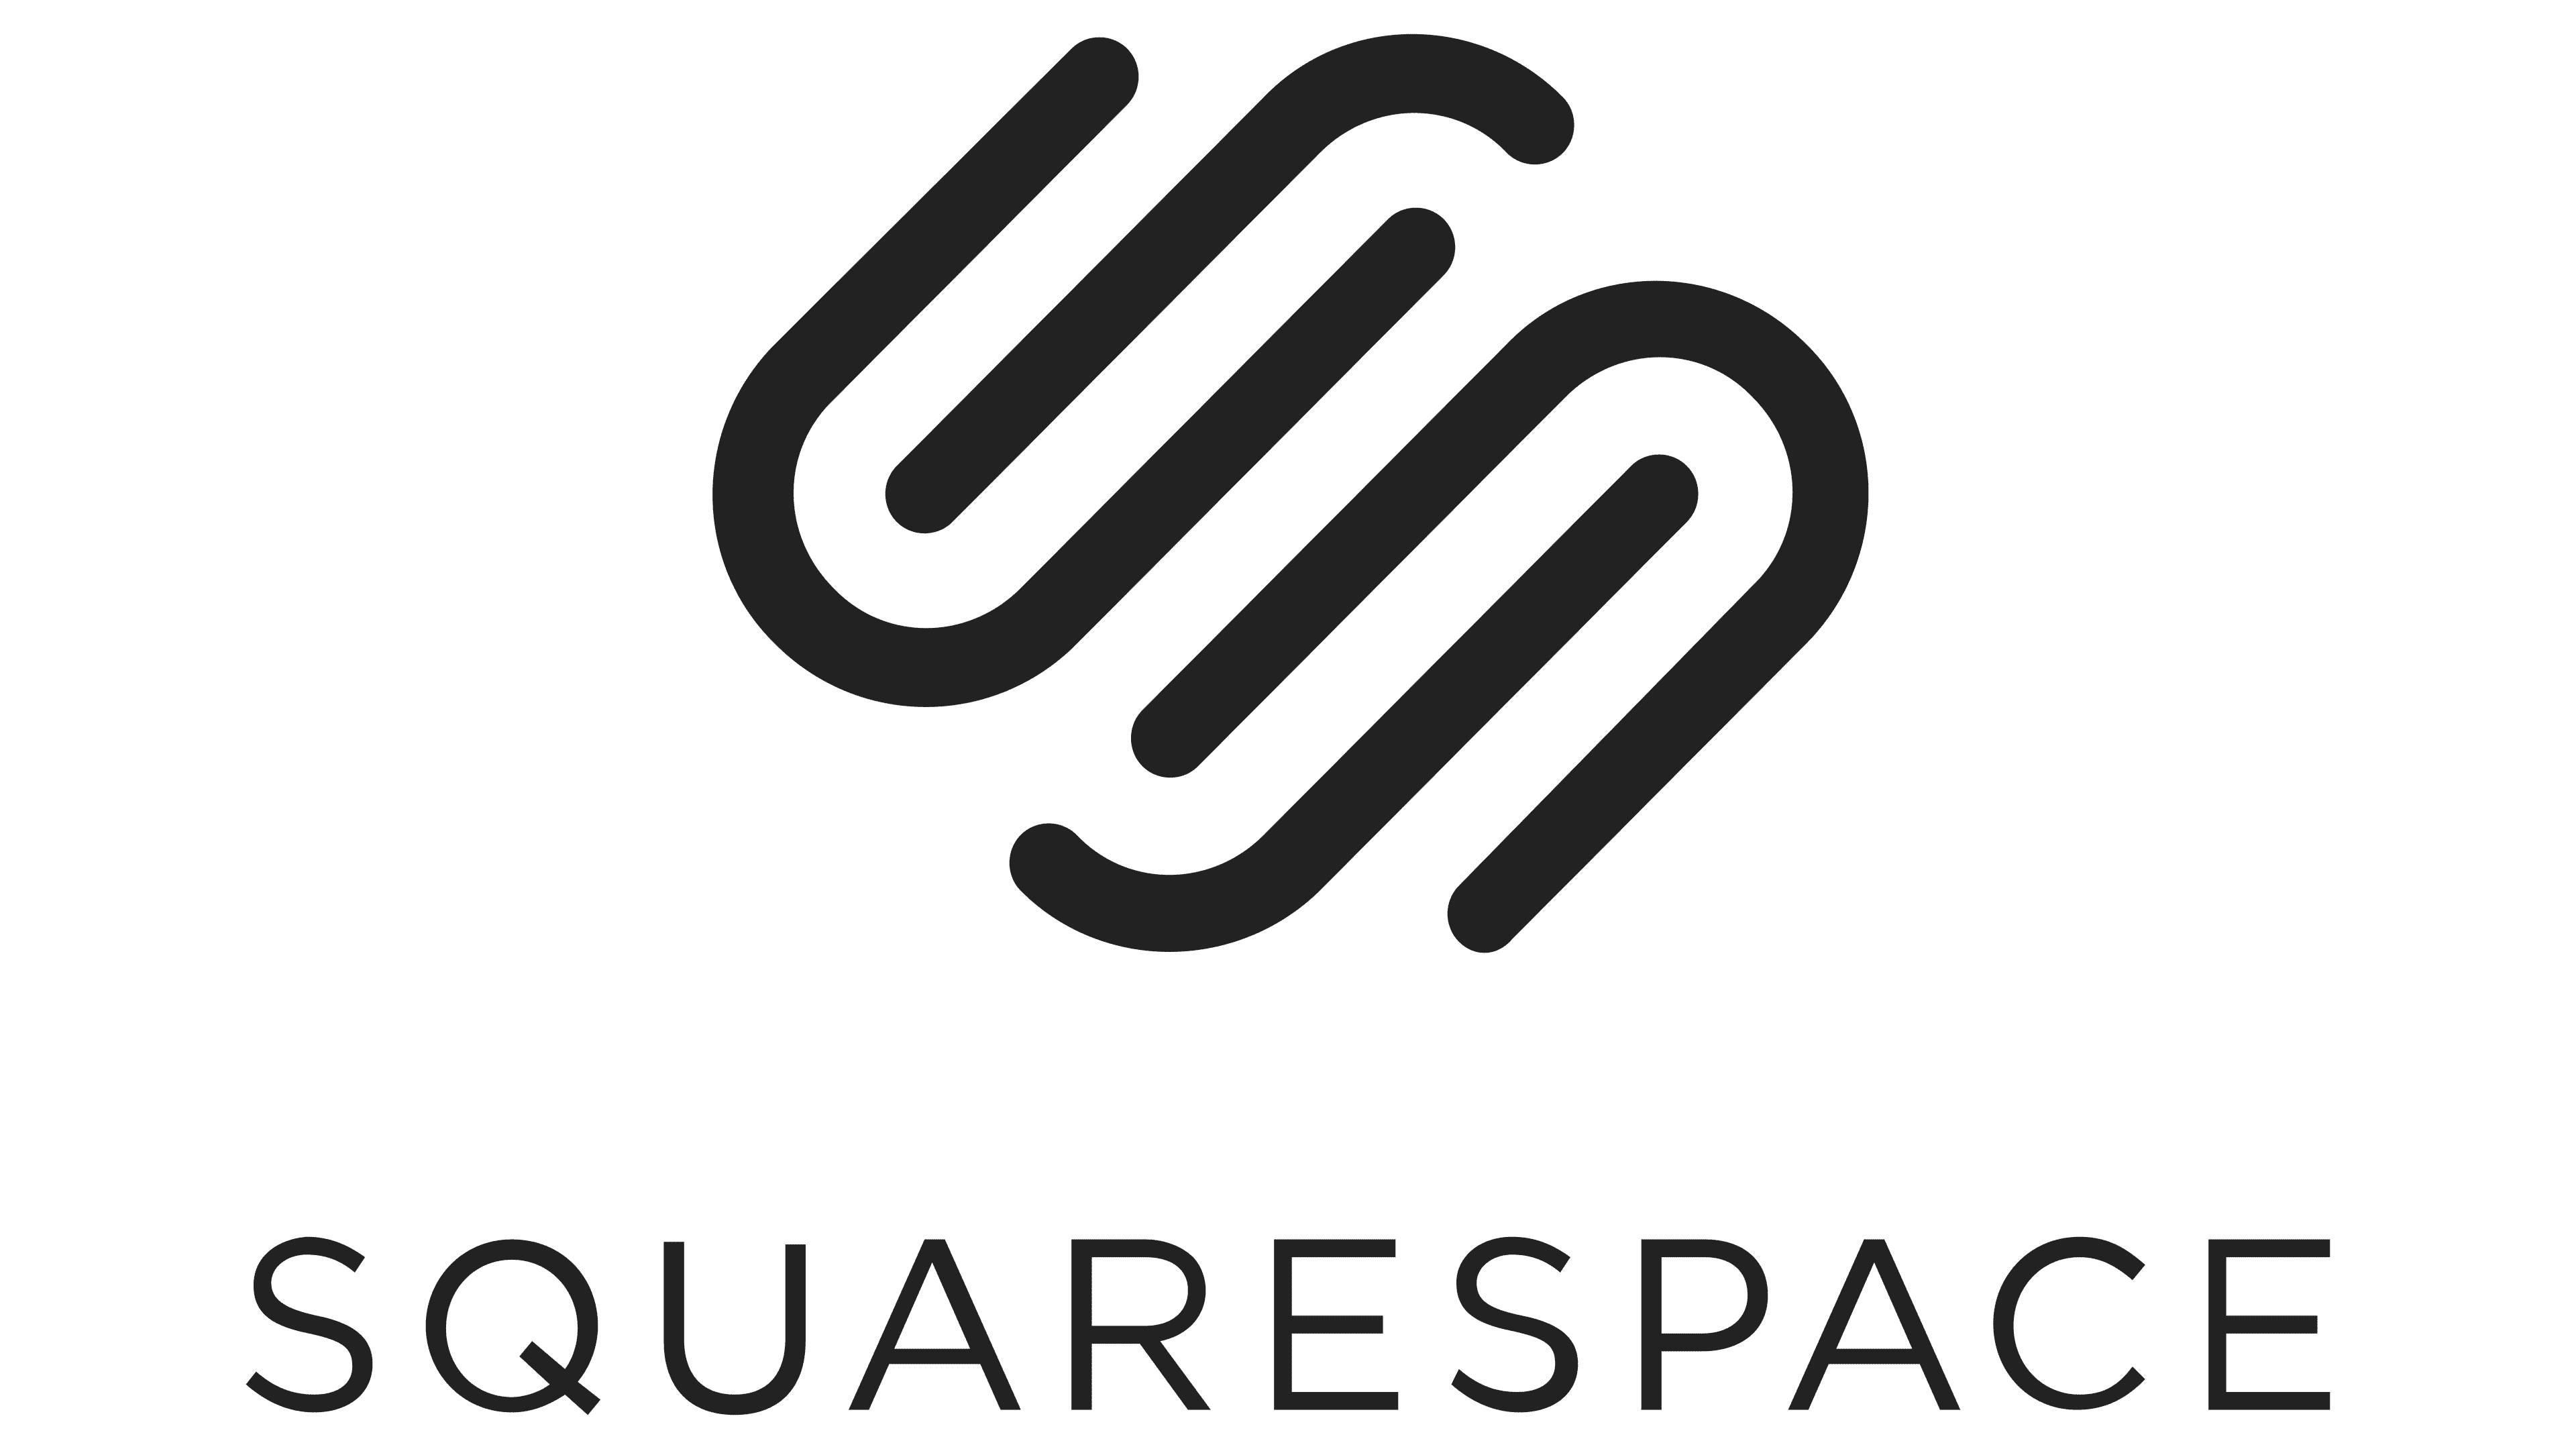 The logo for Squarespace.